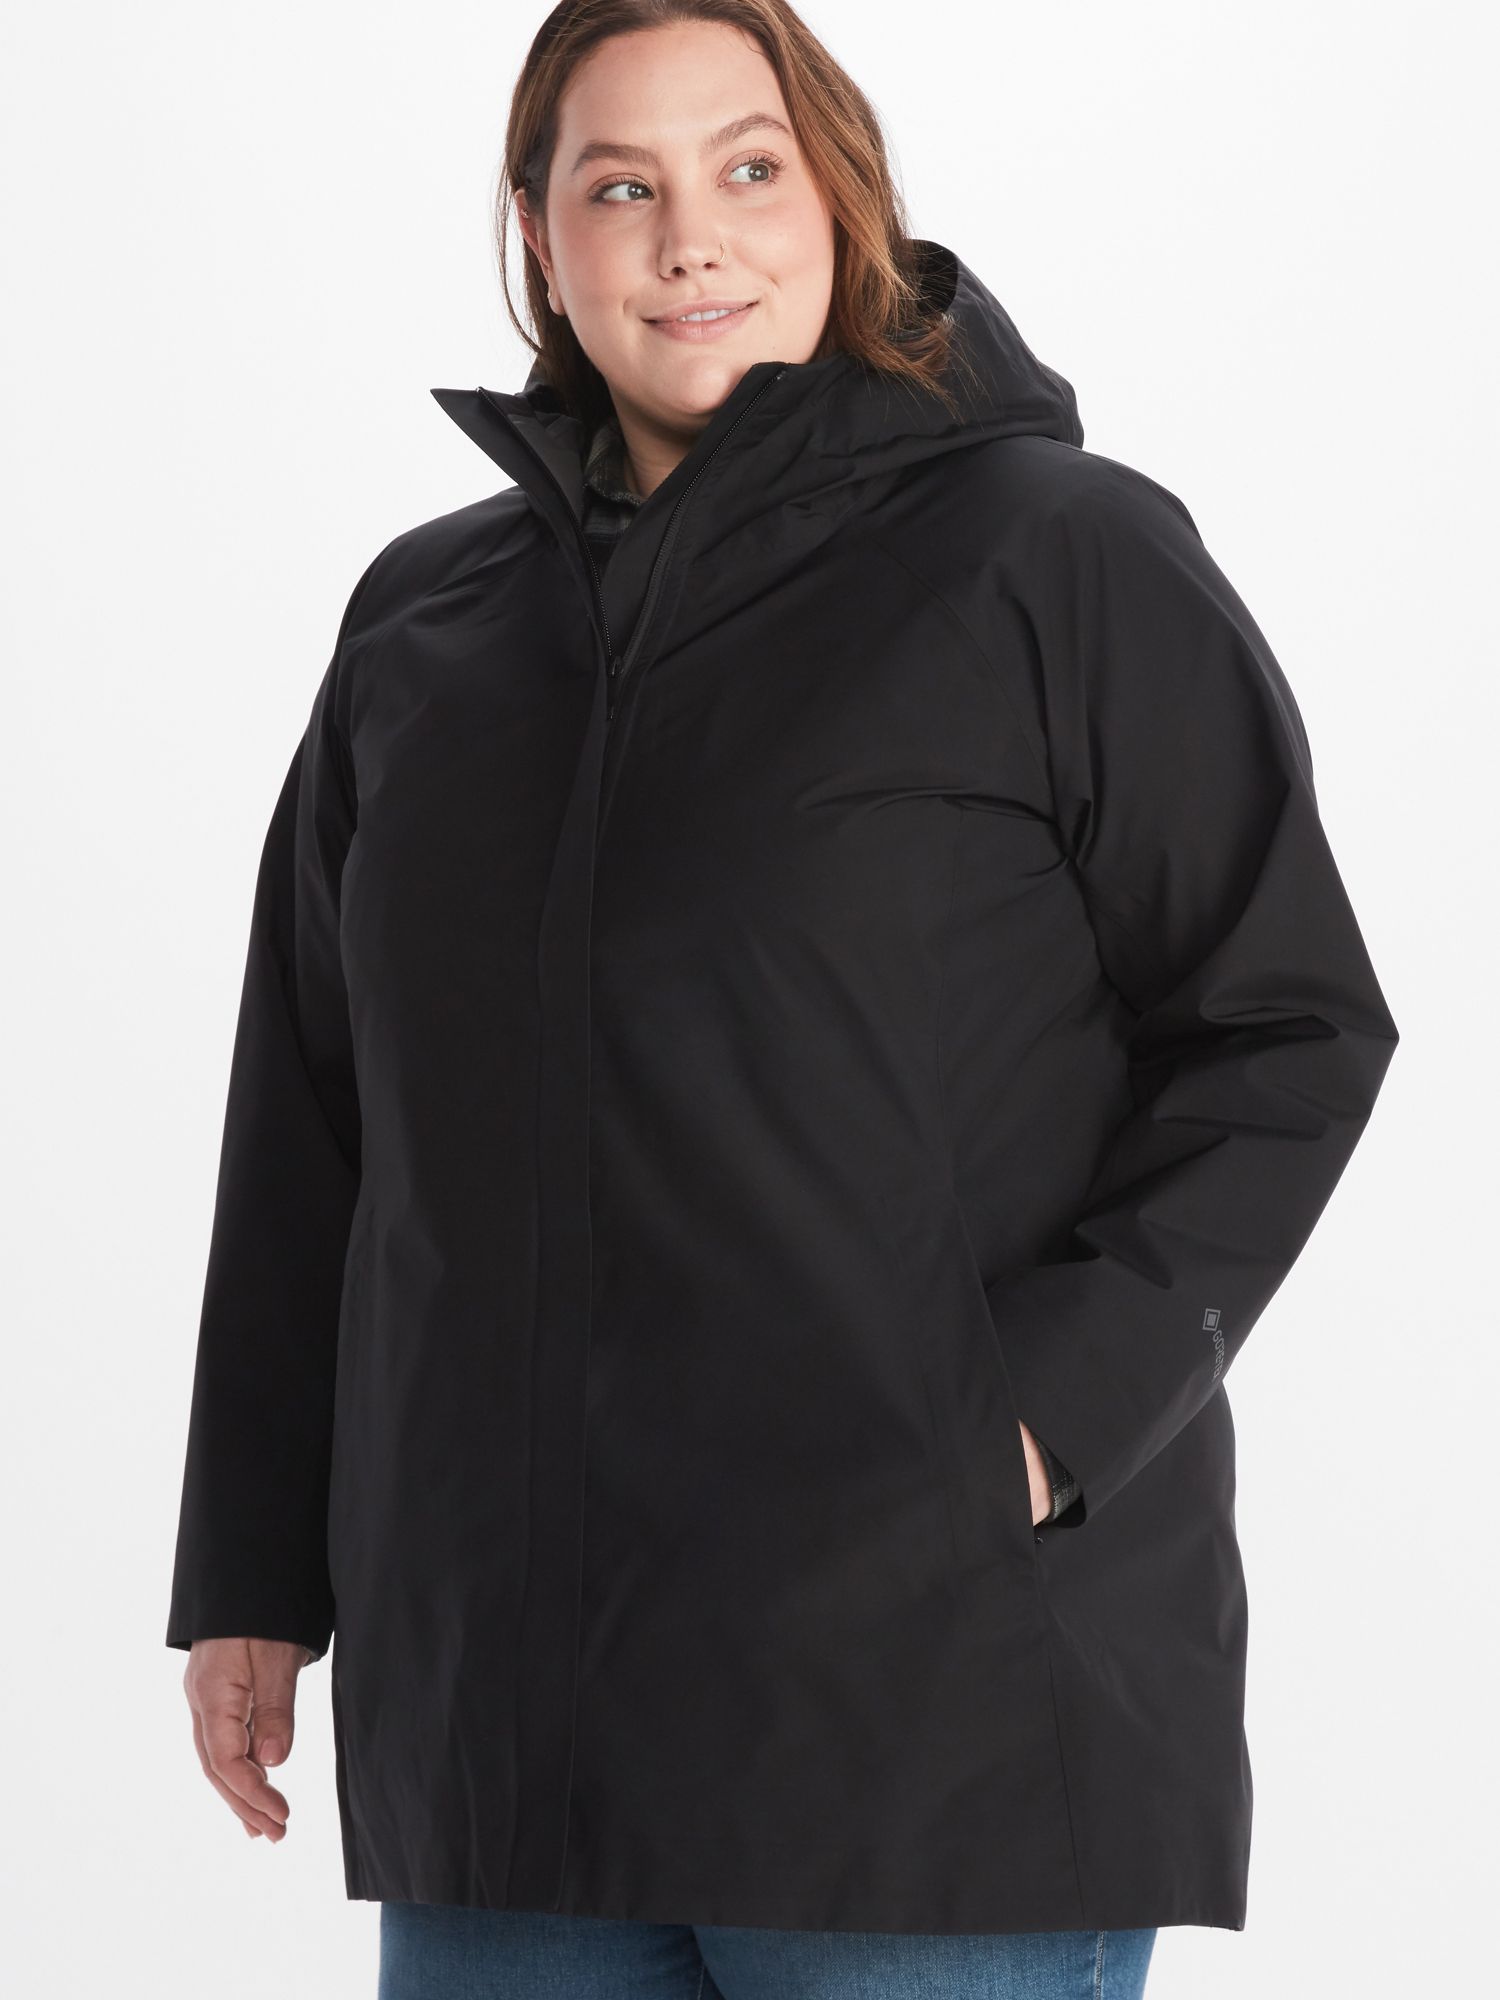 Women's Waterproof Rain Jackets & Raincoats | Marmot